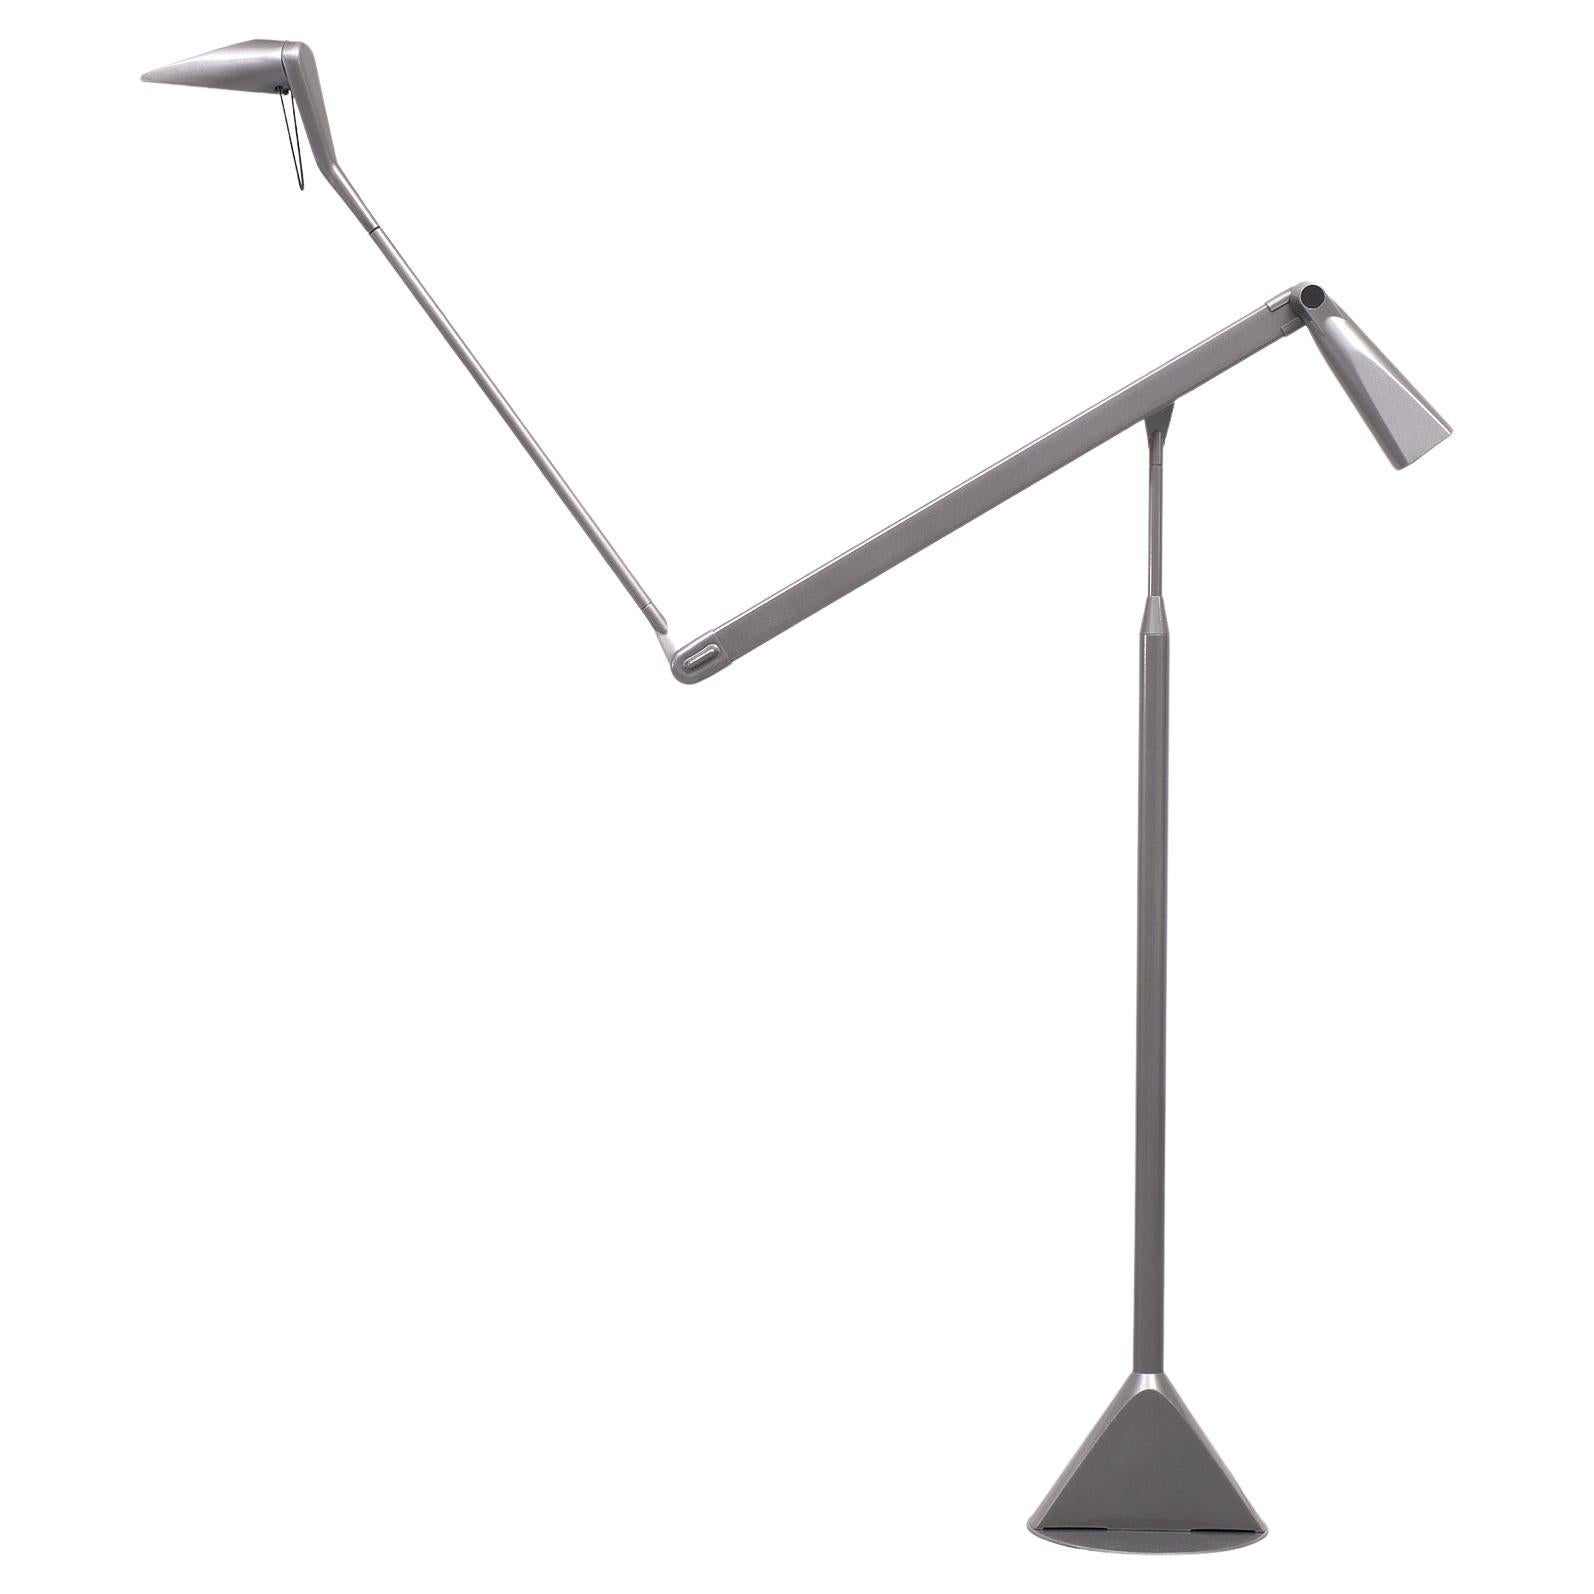 Grey counterweight floor lamp. Design by Walter Monici for Lumina Italy 1980 model ”Zelig Terra ”
Very nice adjustable halogen floor lamp. Two-light intensities. Very flexible, it stays in any desired position.

